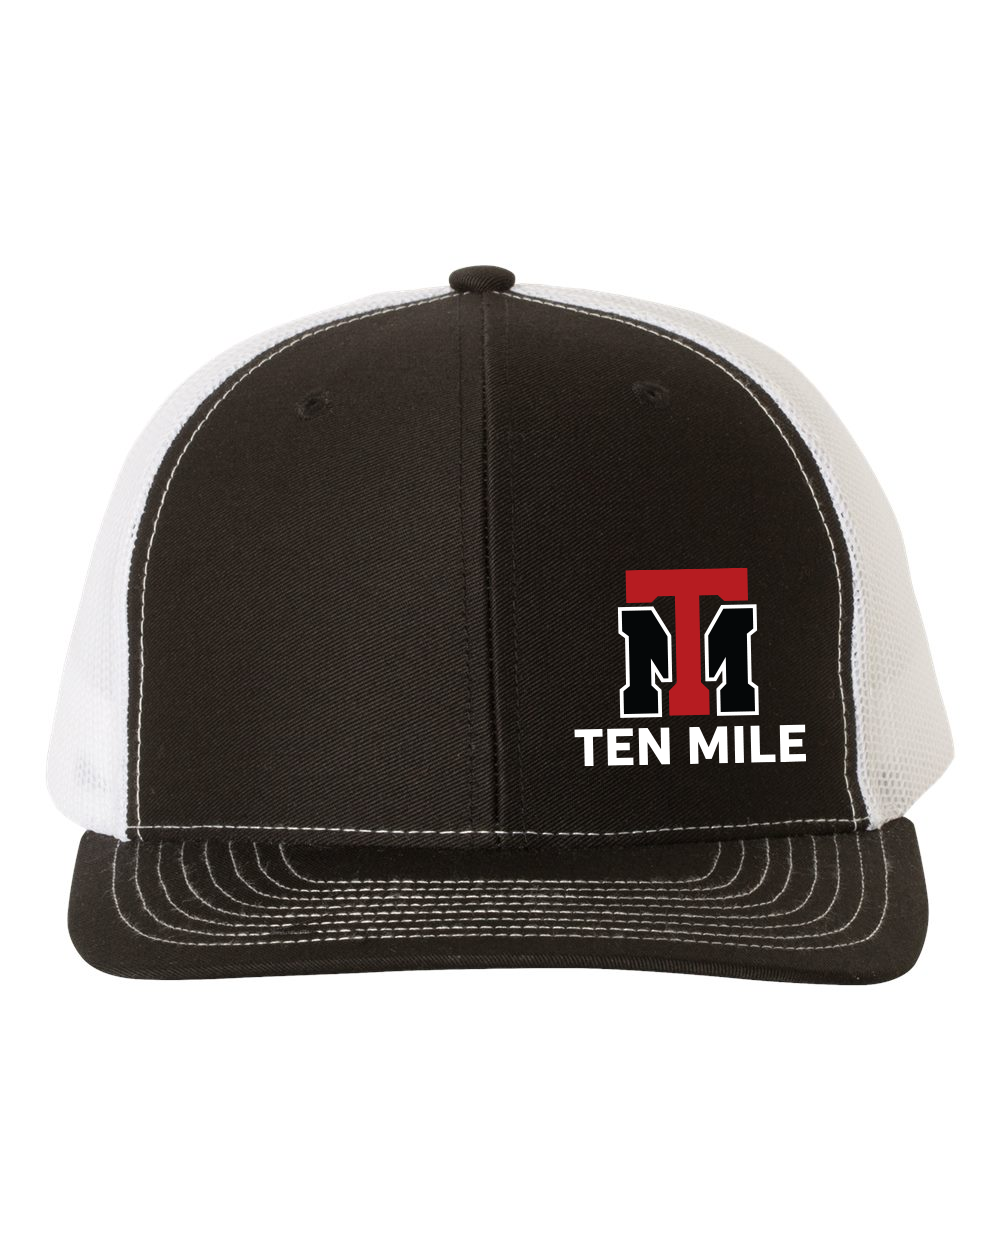 Ten Mile - Richardson Adjustable Snapback Trucker Cap